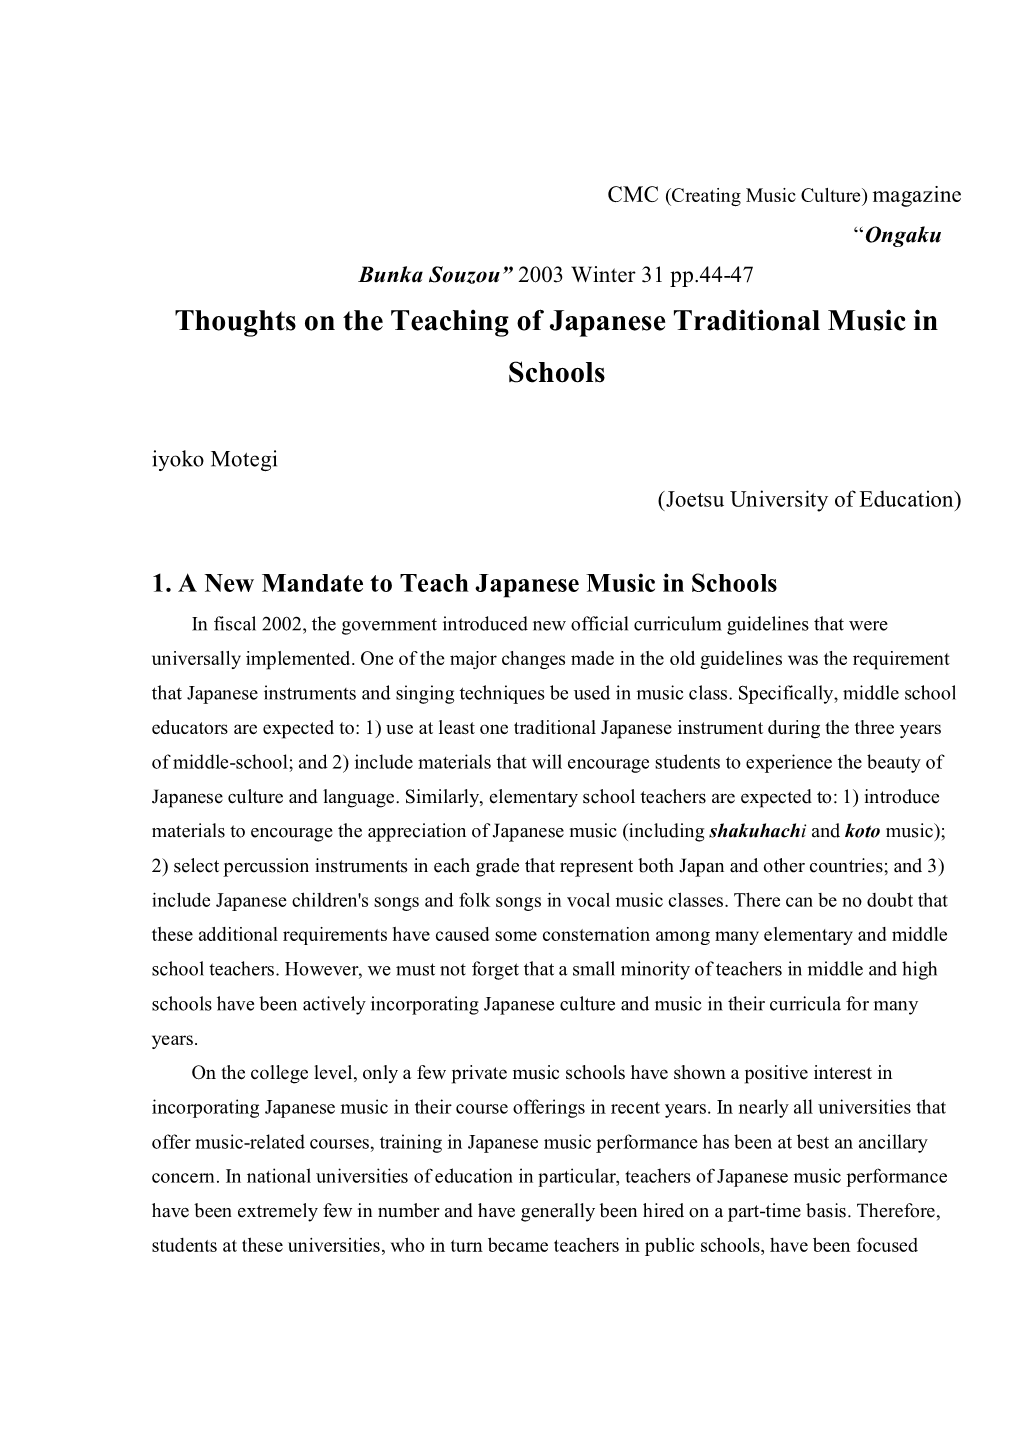 Thoughts on the Teaching of Japanese Traditional Music in Schools Iyoko Motegi (Joetsu University of Education)